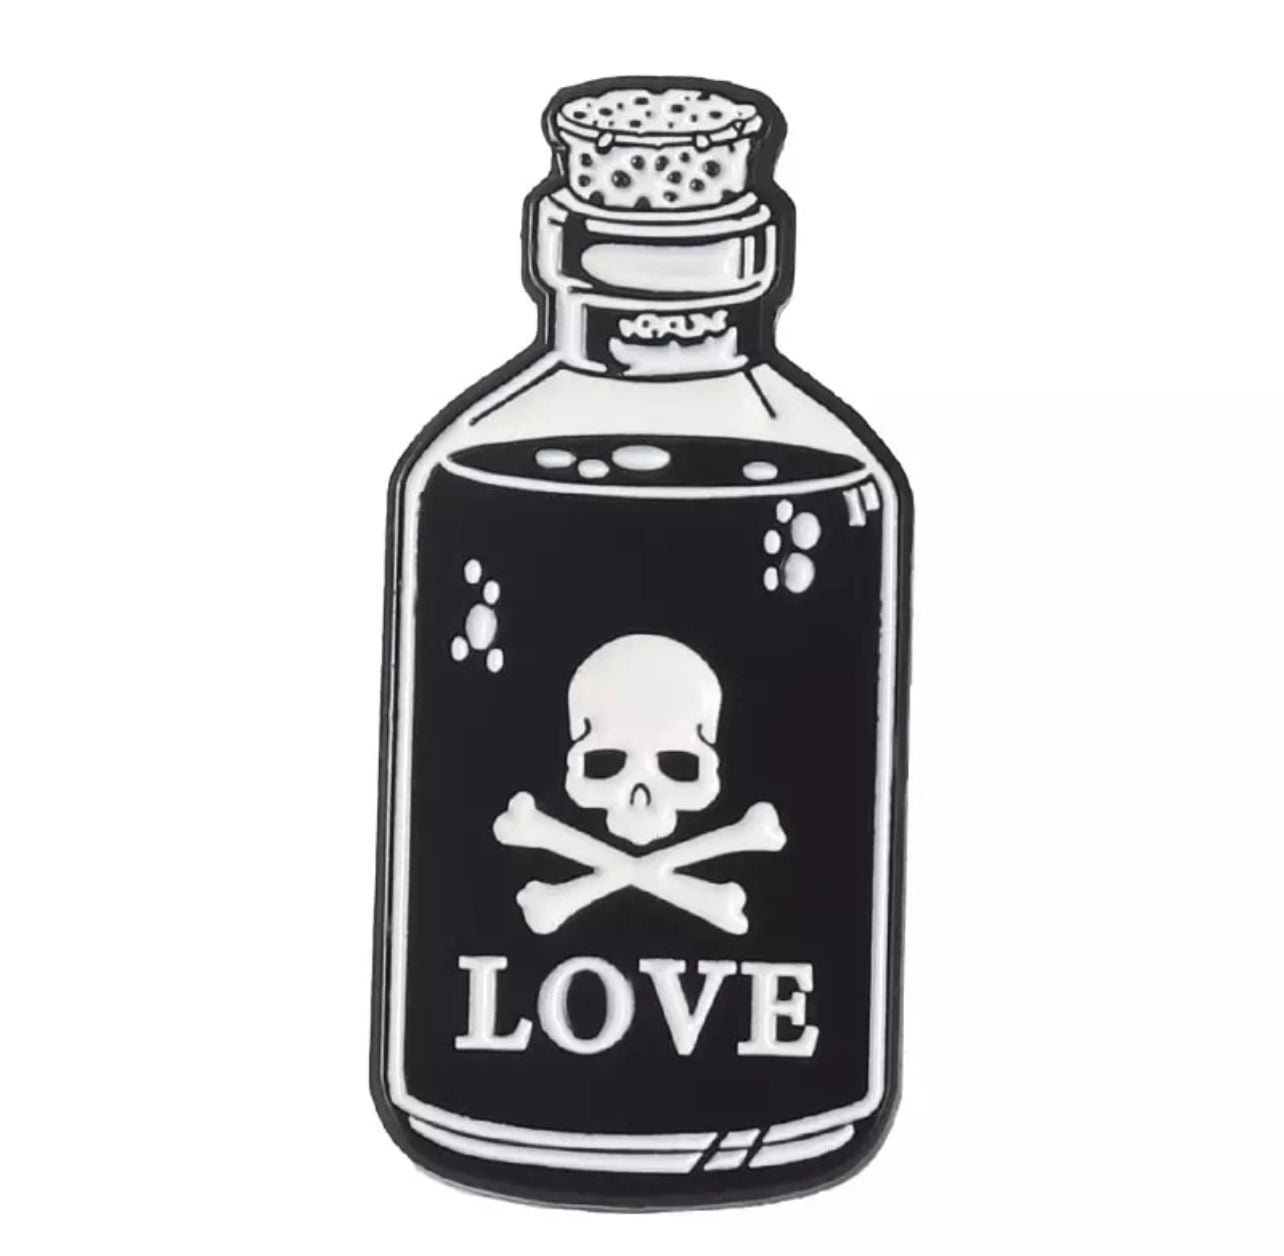 Bottle of love